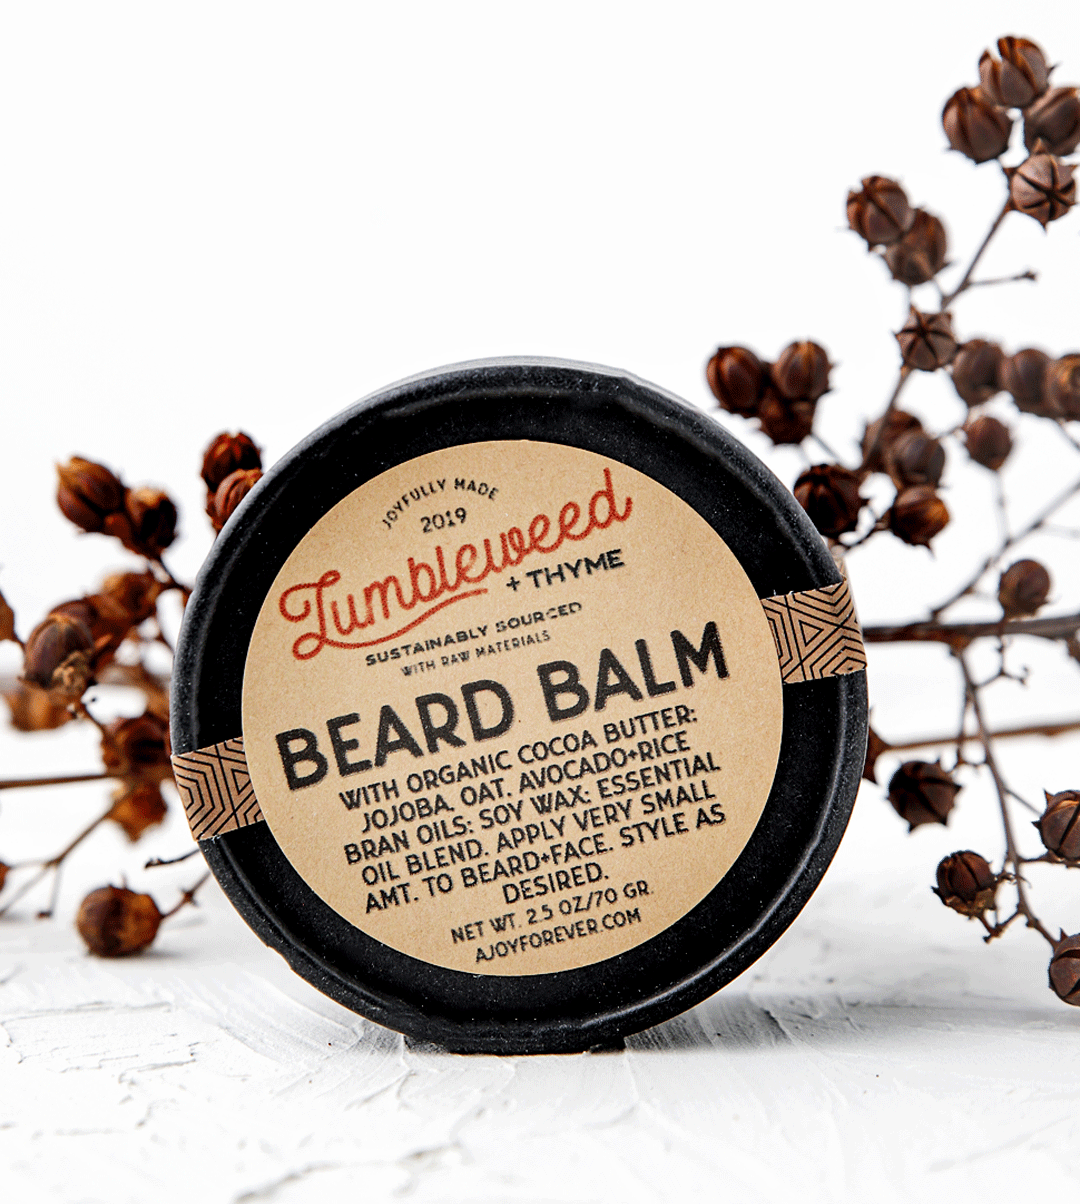 Tumbleweed + Thyme Vegan Beard Balm - A Joy Forever Bath + Body